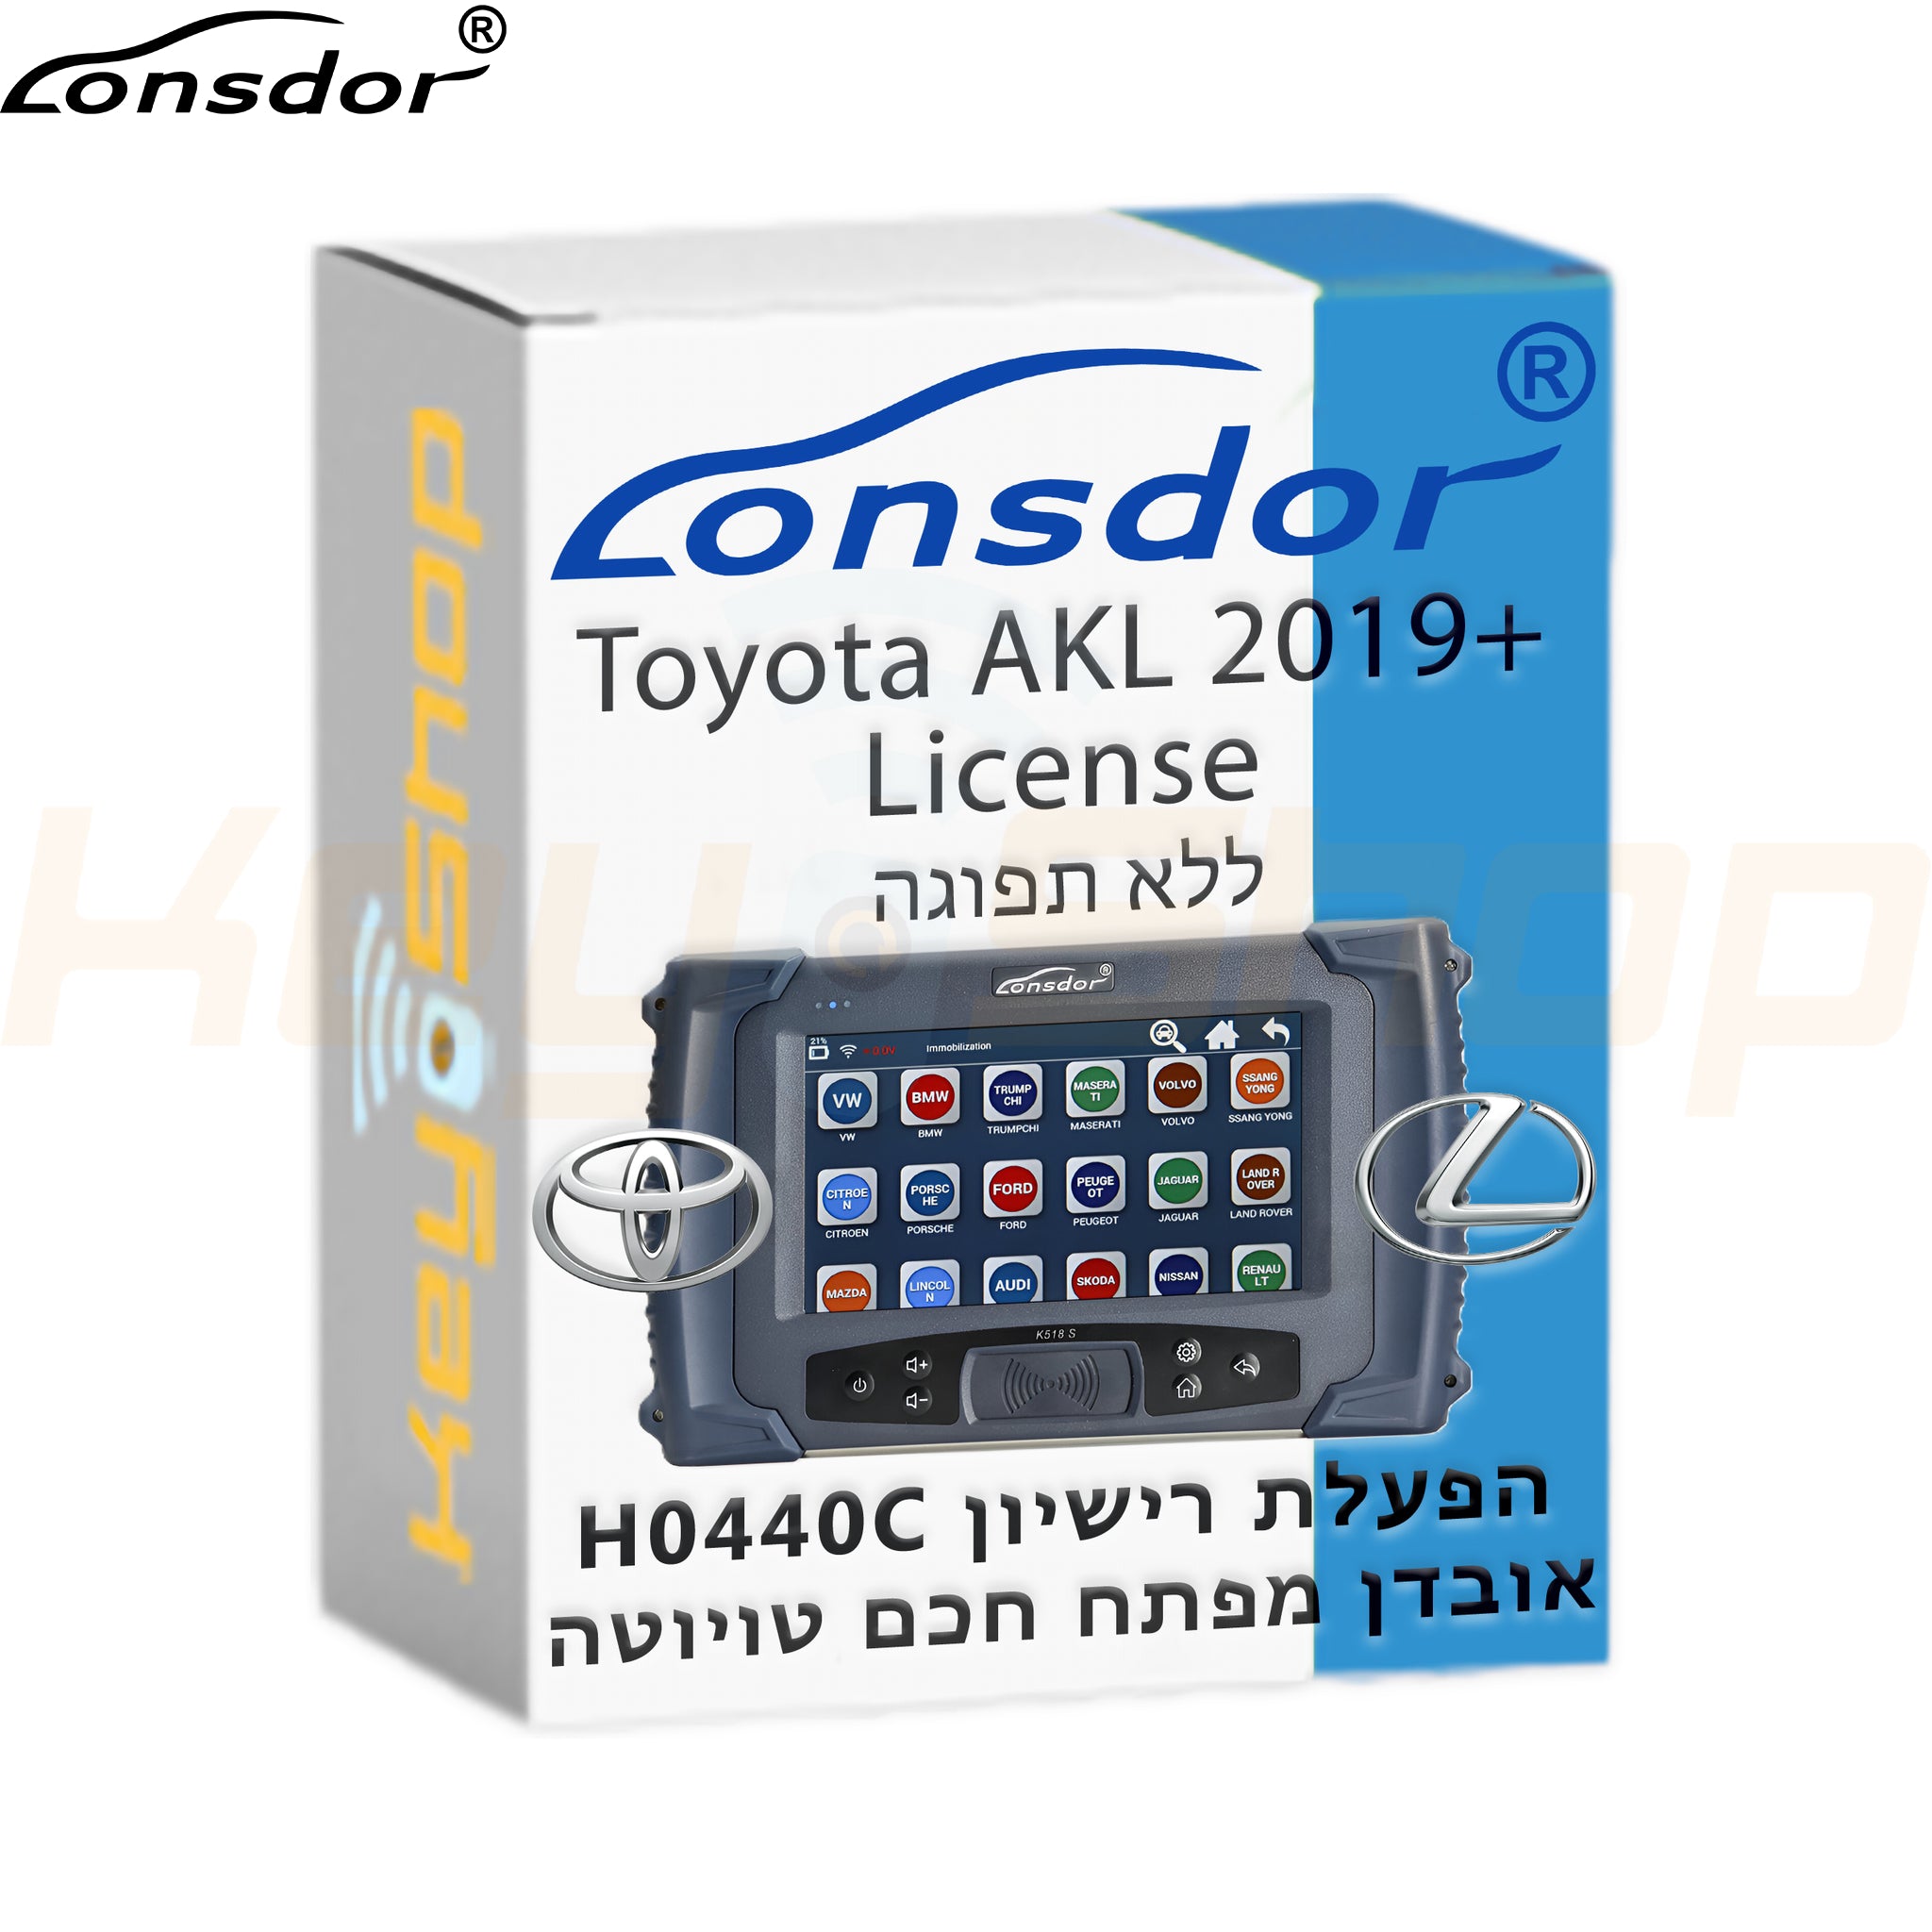 Lonsdor 2020 Toyota AKL License - H0440C רישיון אובדן מפתח חכם טויוטה 2019+